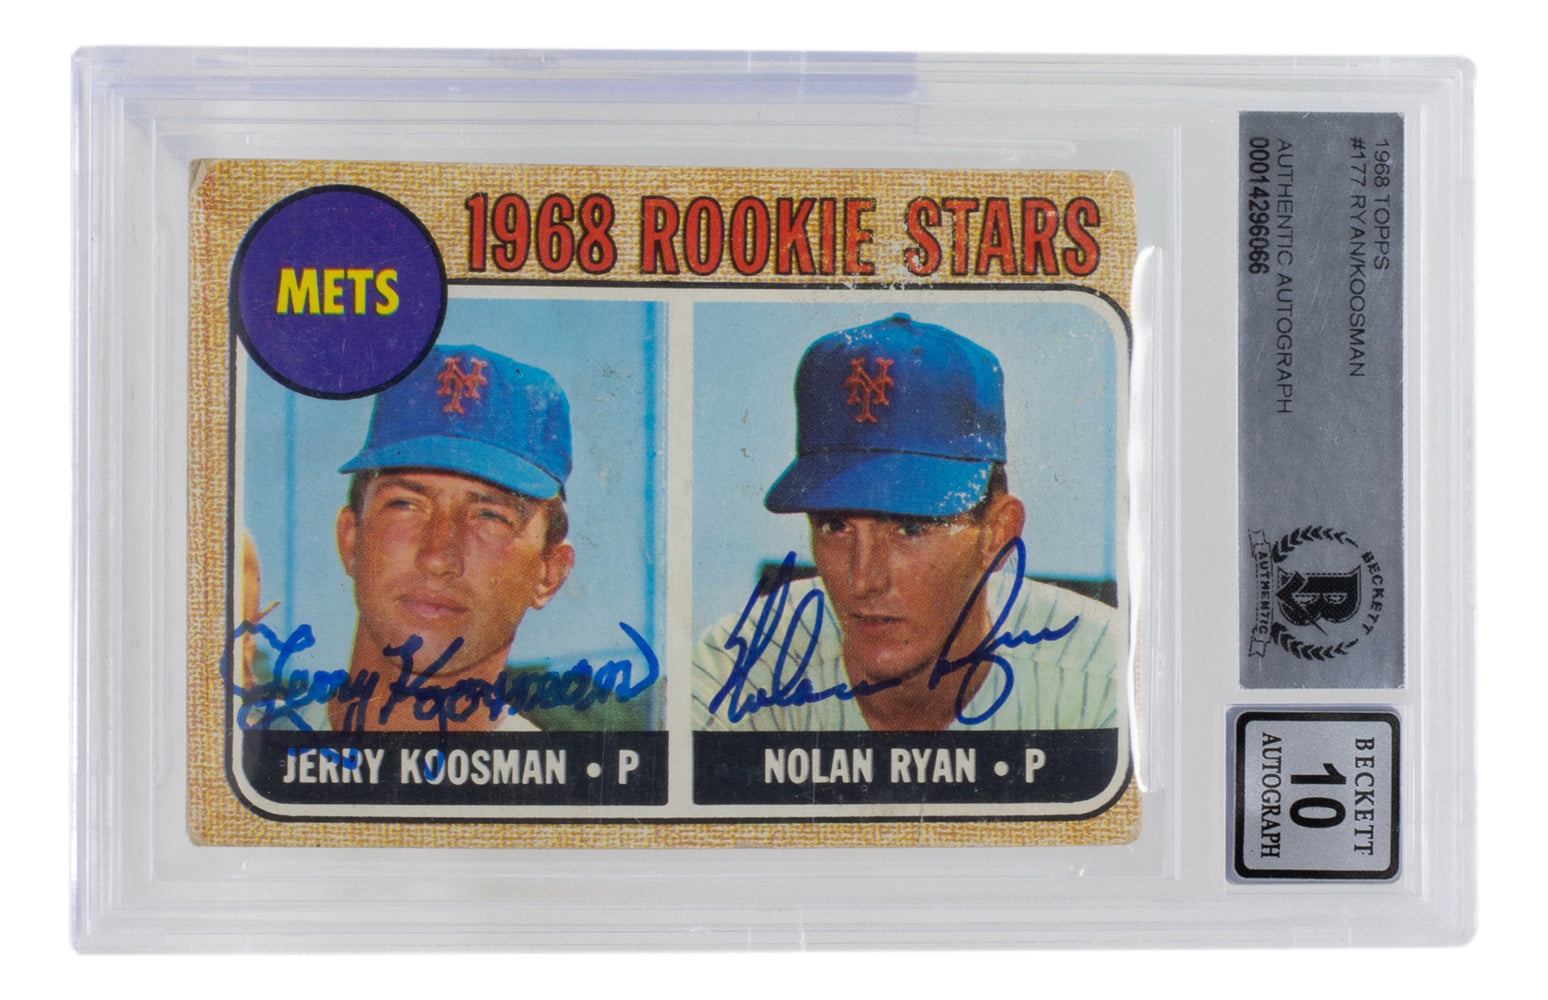 1968 Topps Nolan Ryan Rookie Card: A Closer Look